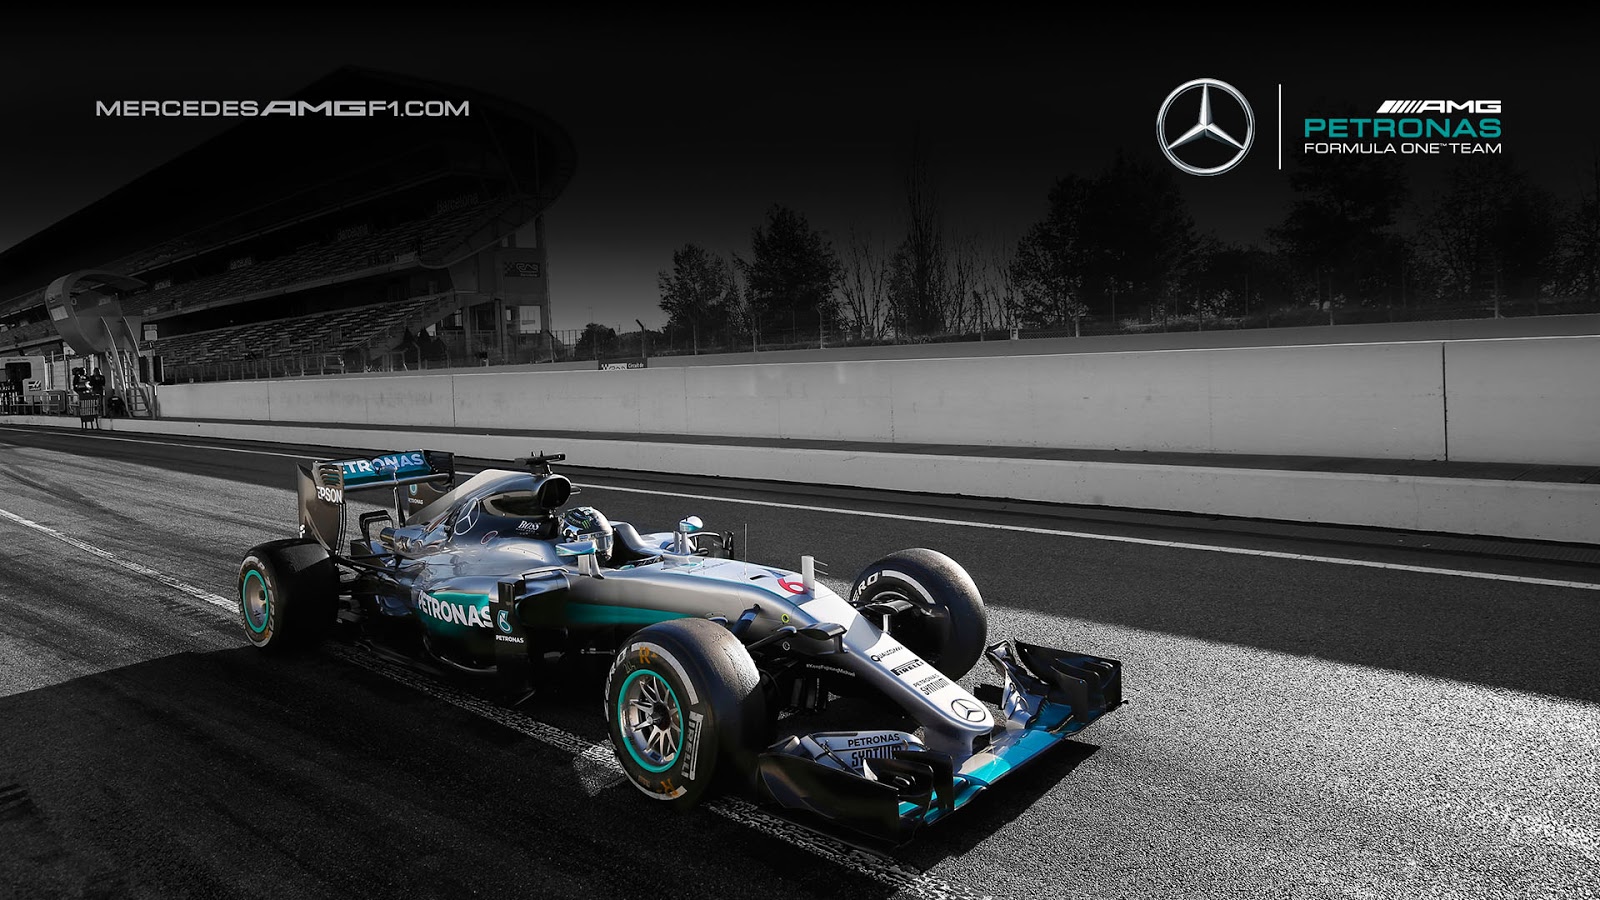 Mercedes Amg Petronas W07 F1 Wallpaper Kfzoom